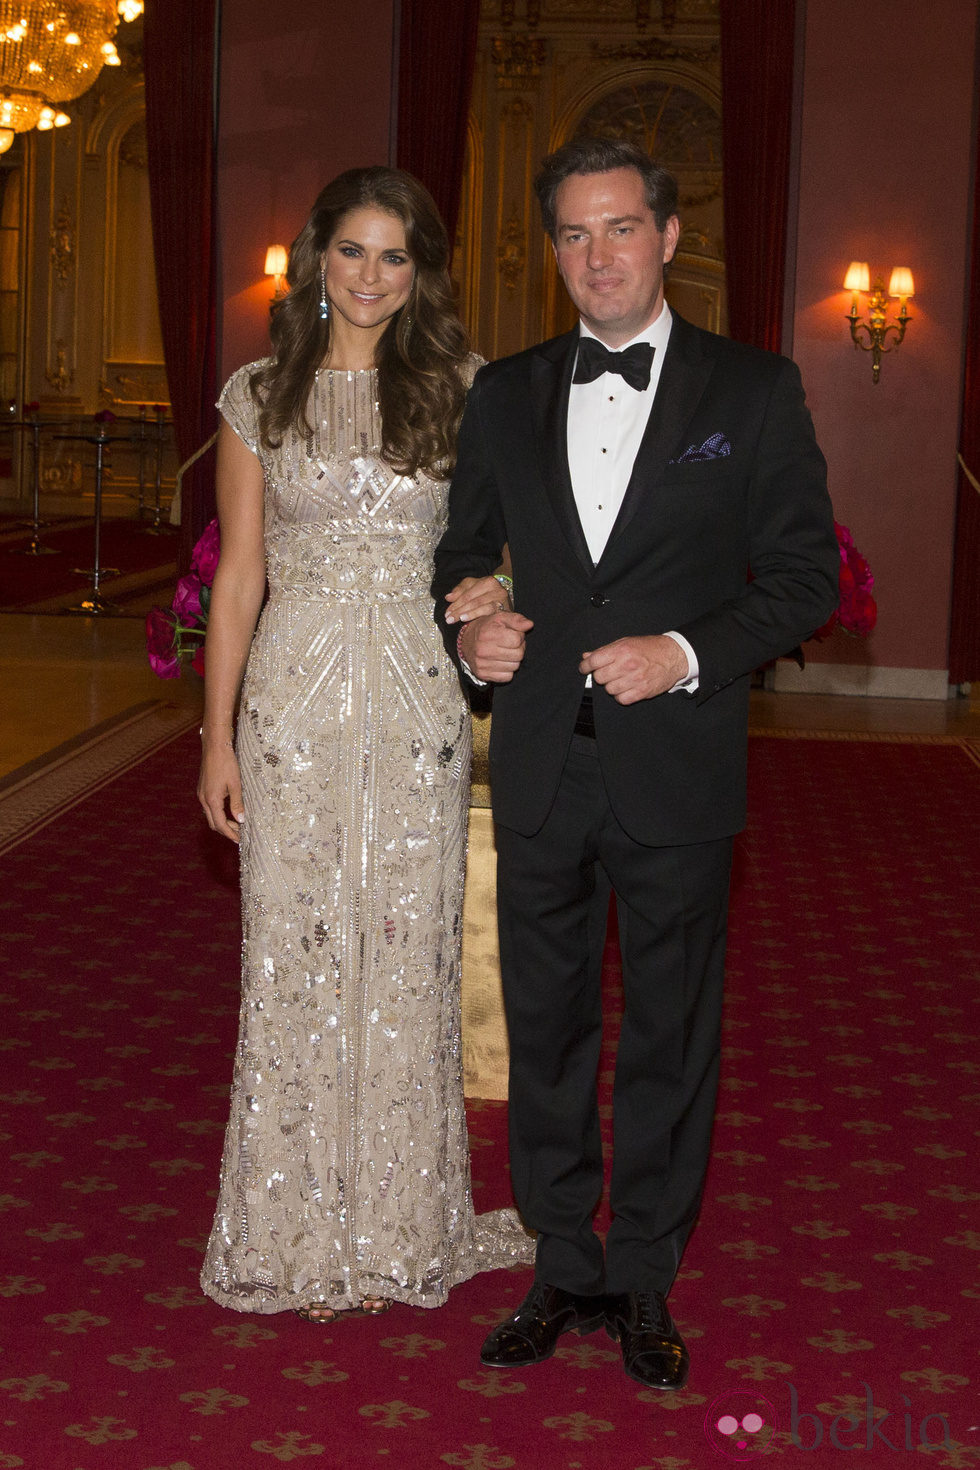 Chris O'Neill con un esmoquin negro en la cena de gala previa a su boda